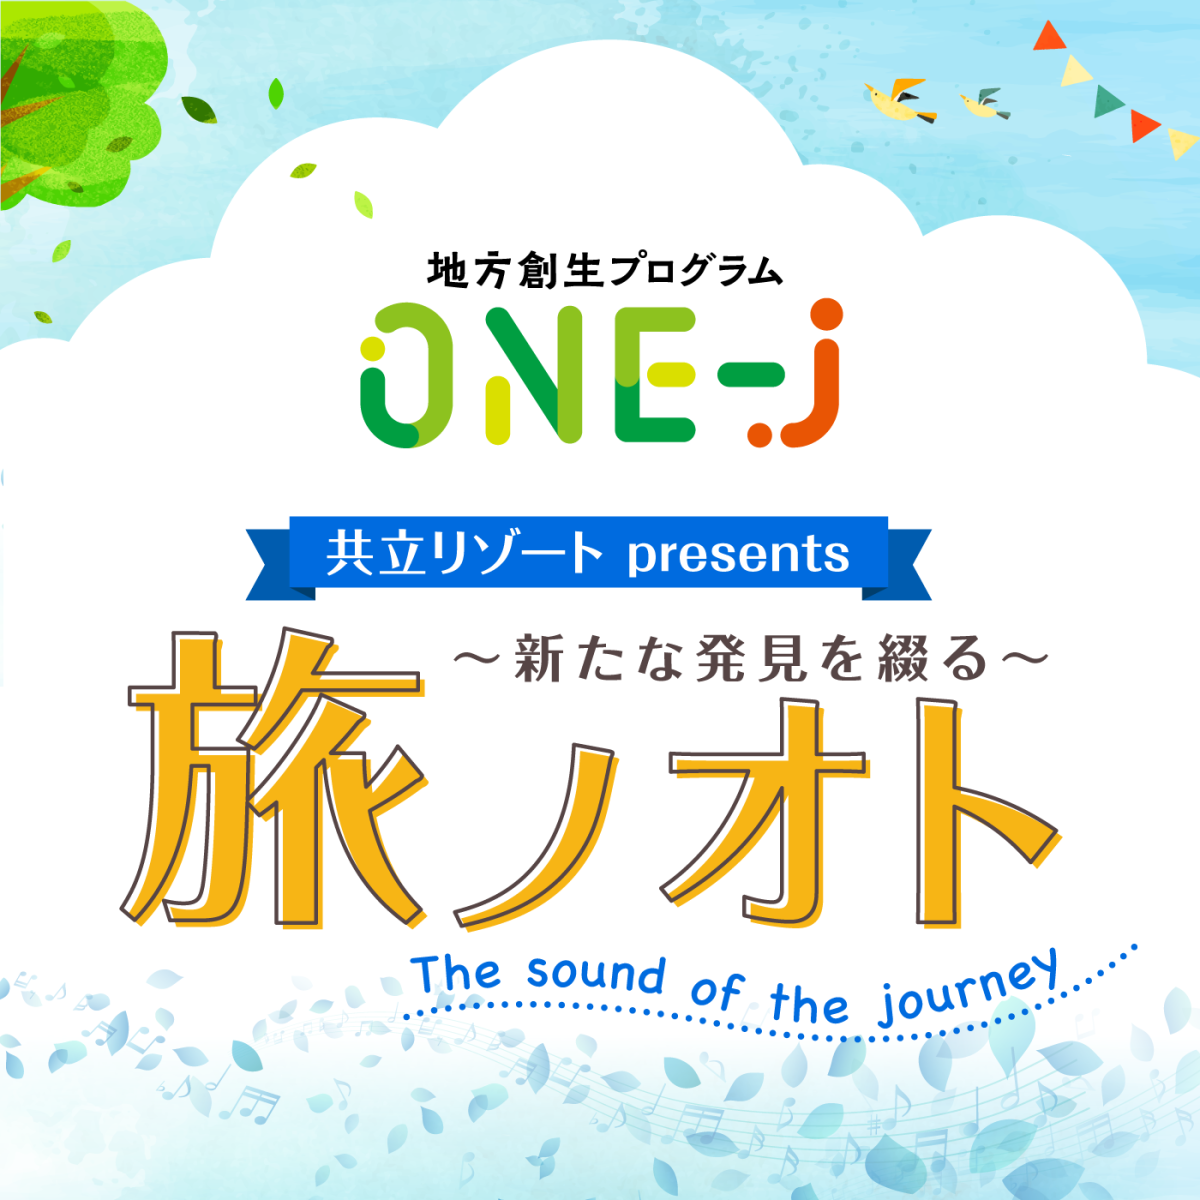 ONE-J「共立リゾートpresents 〜新たな発見を綴る〜旅ノオト」